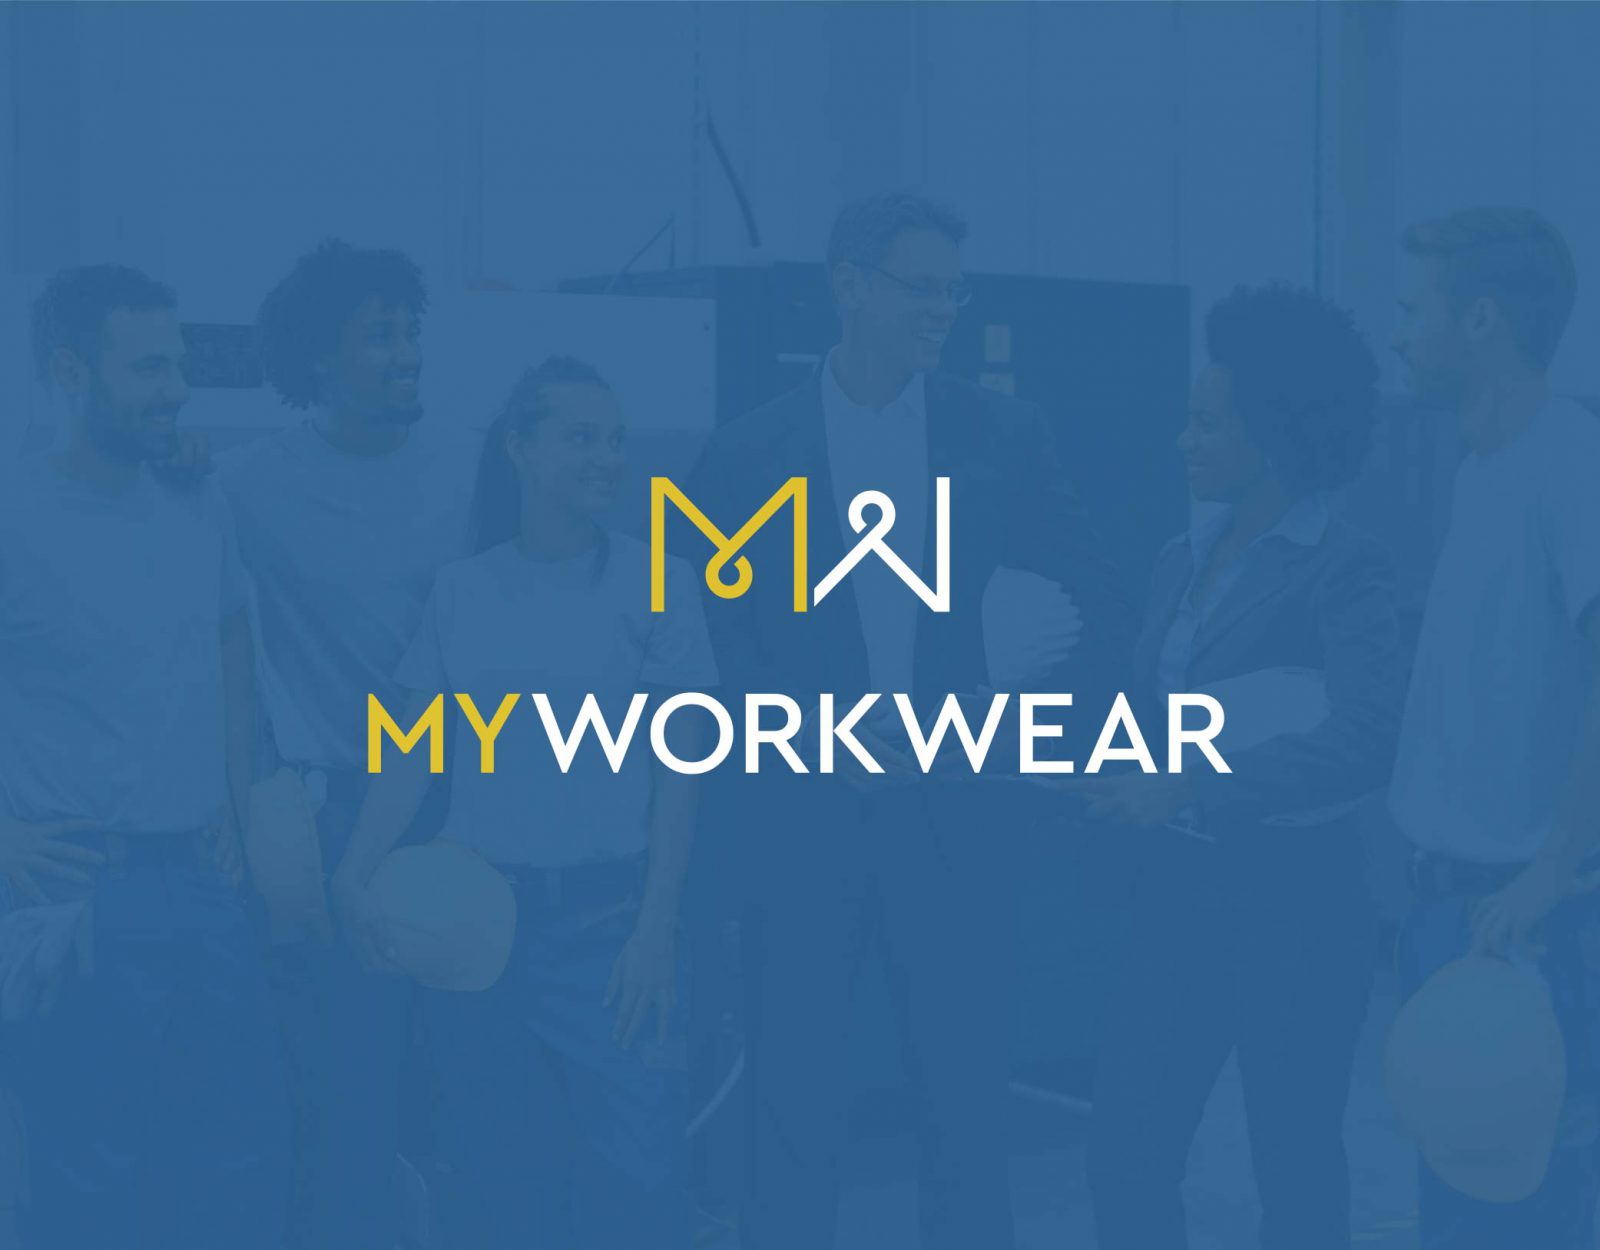 MyWorkwear logo